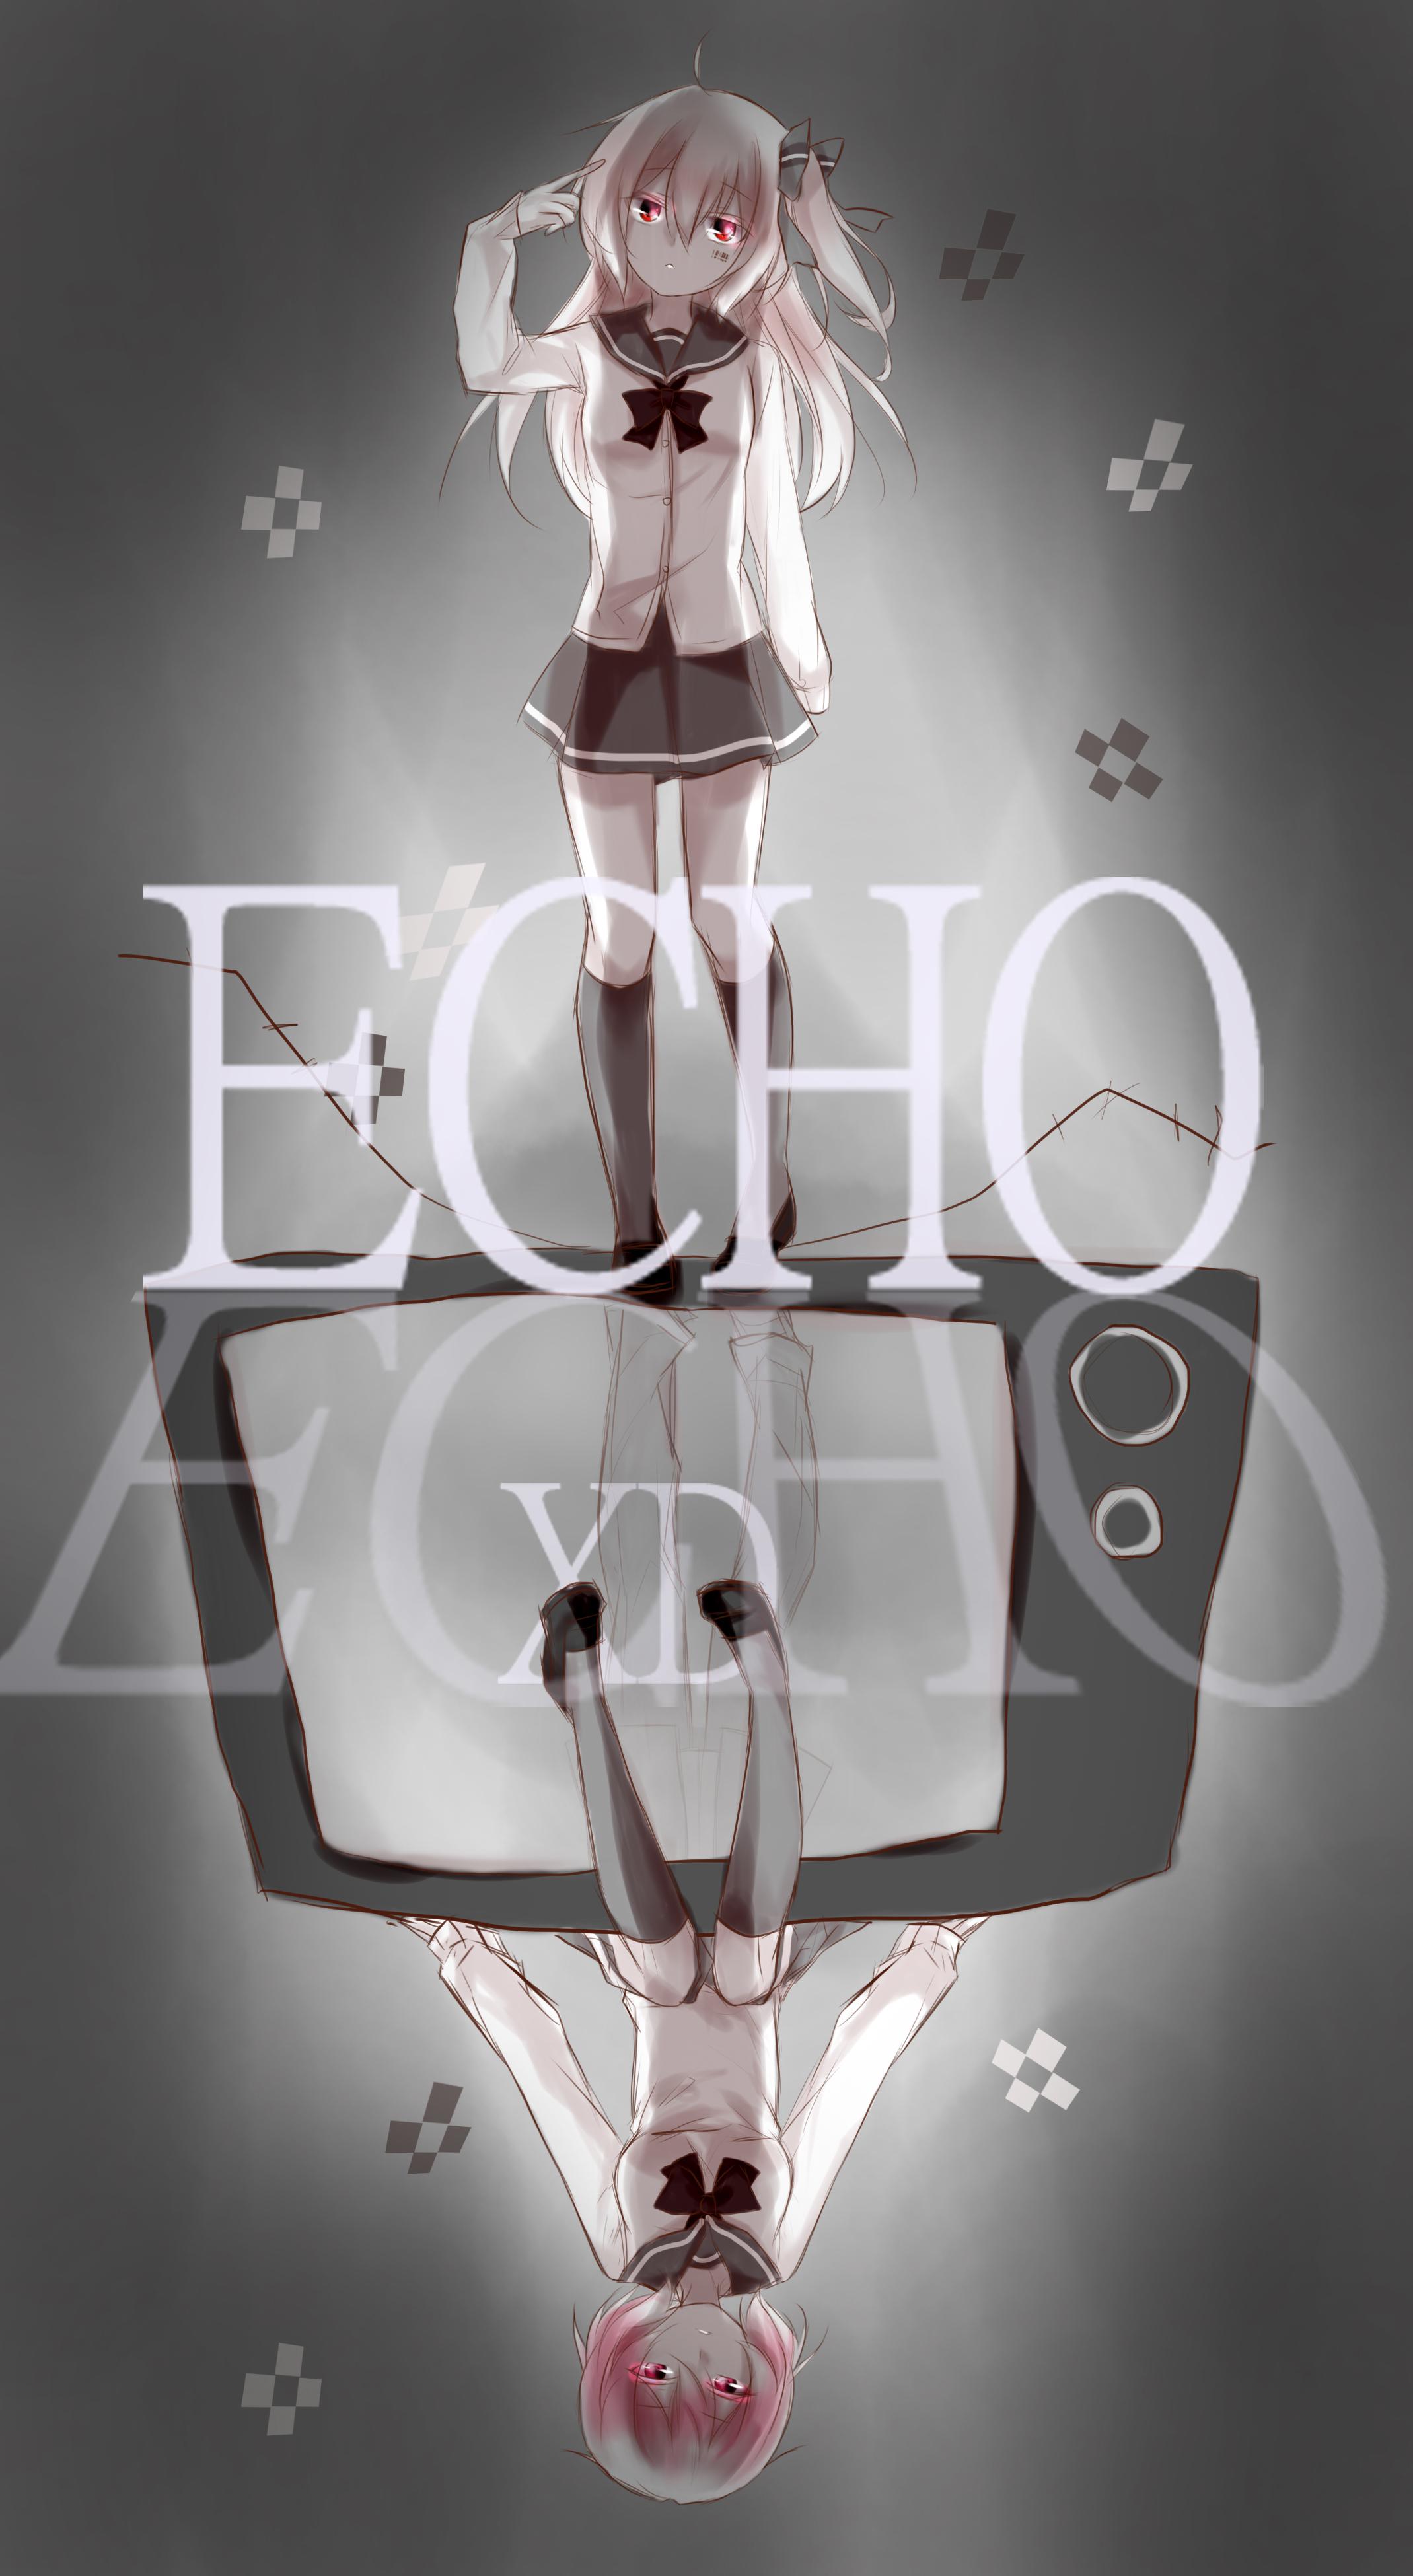 ECHO插画图片壁纸